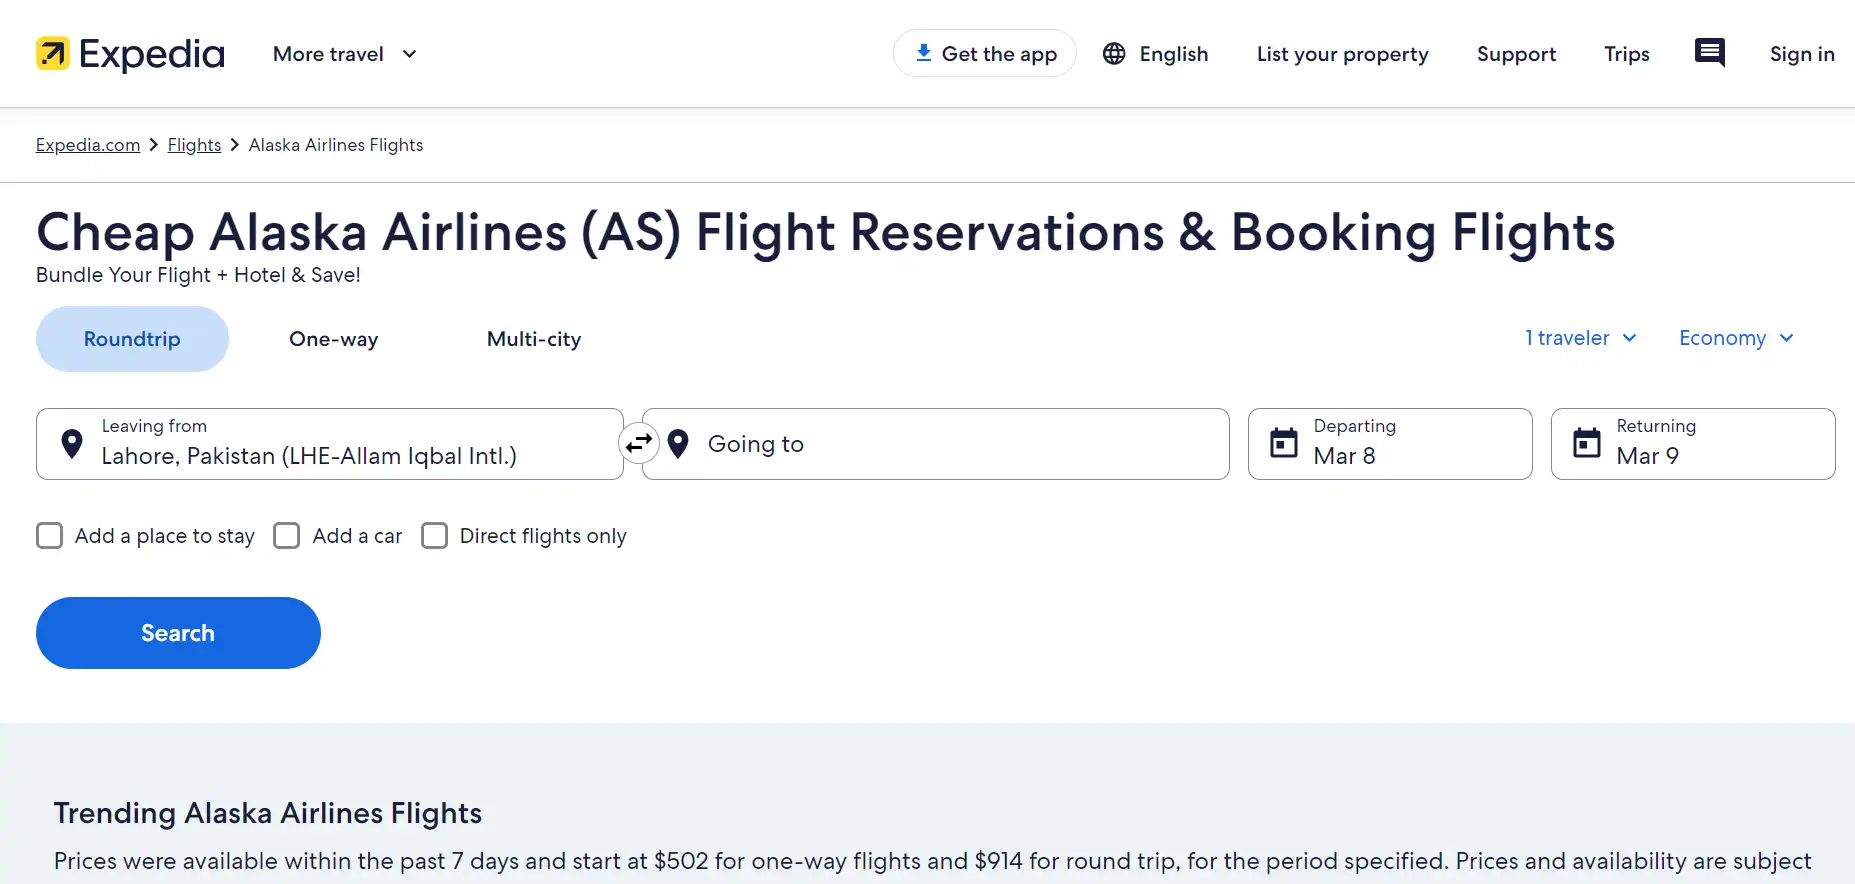 Cheap Alaska Airlines (AS) Flight Reservations & Booking Flights